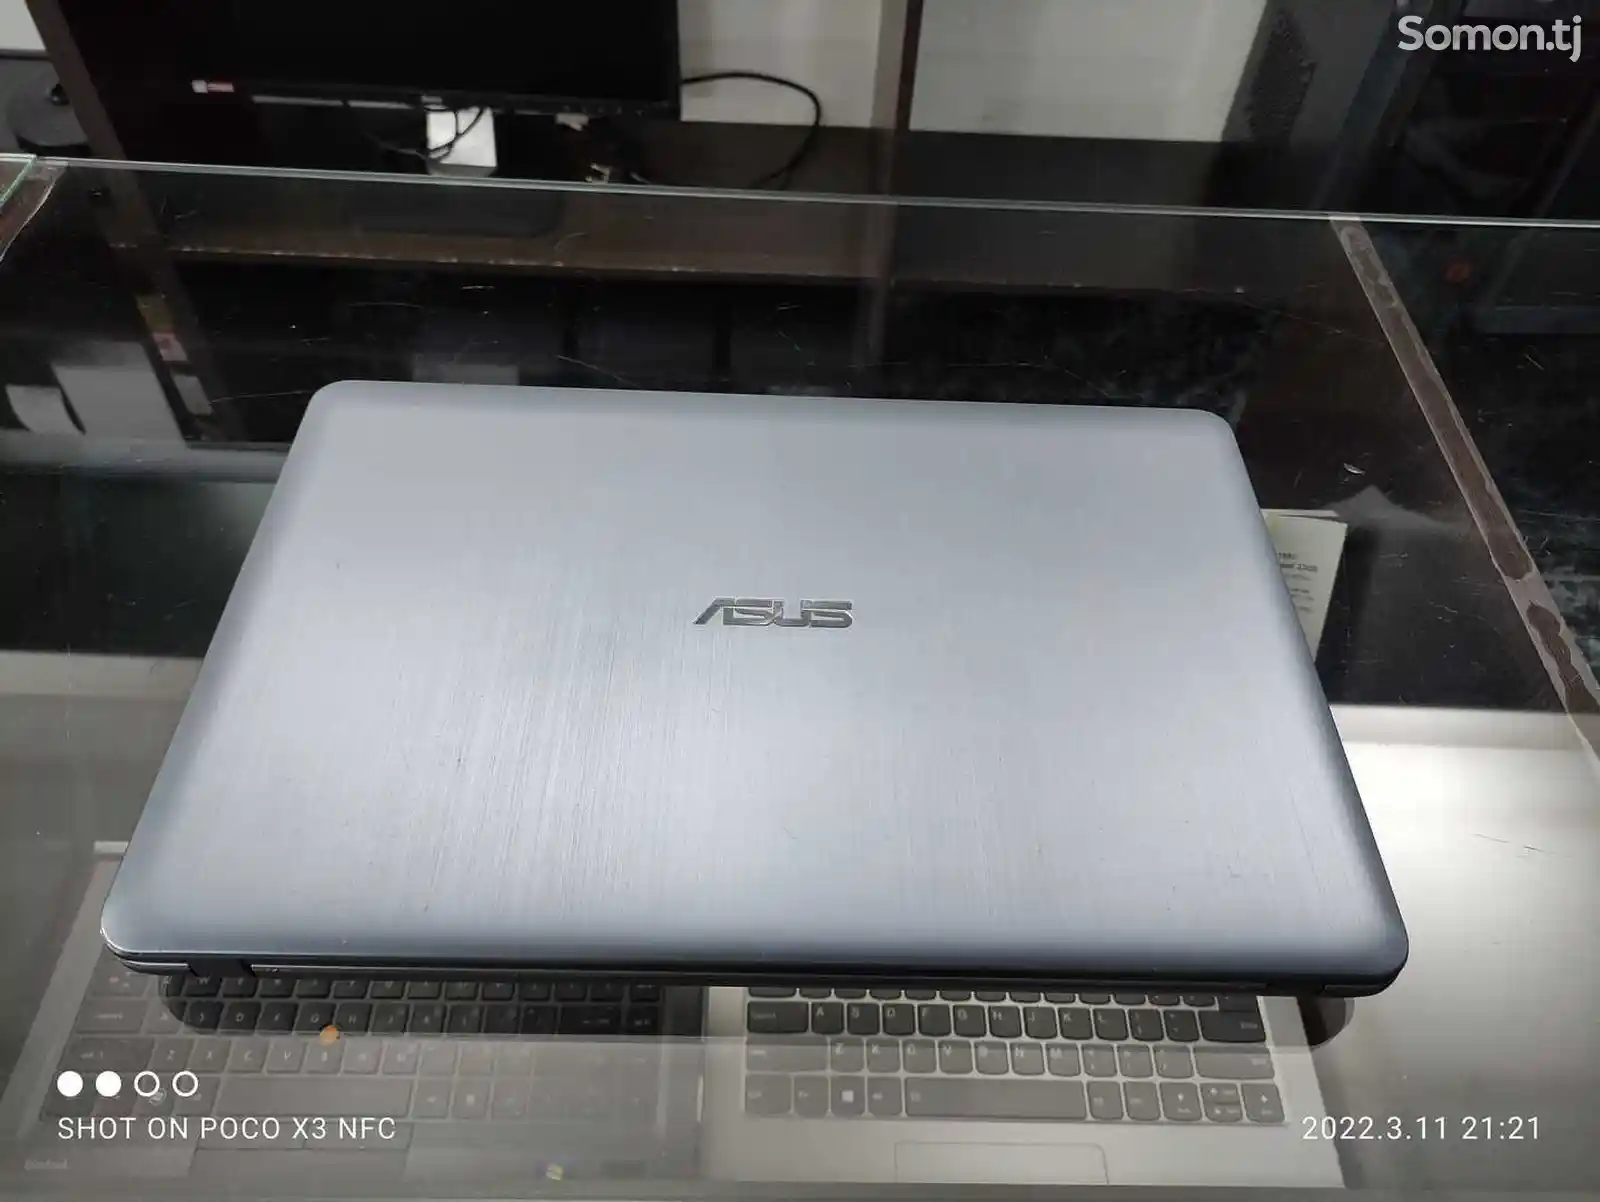 Игровой ноутбук Asus X541UJ Core i7-7500U 2.9GHz 8gb/256gb SSD 7TH GEN-7